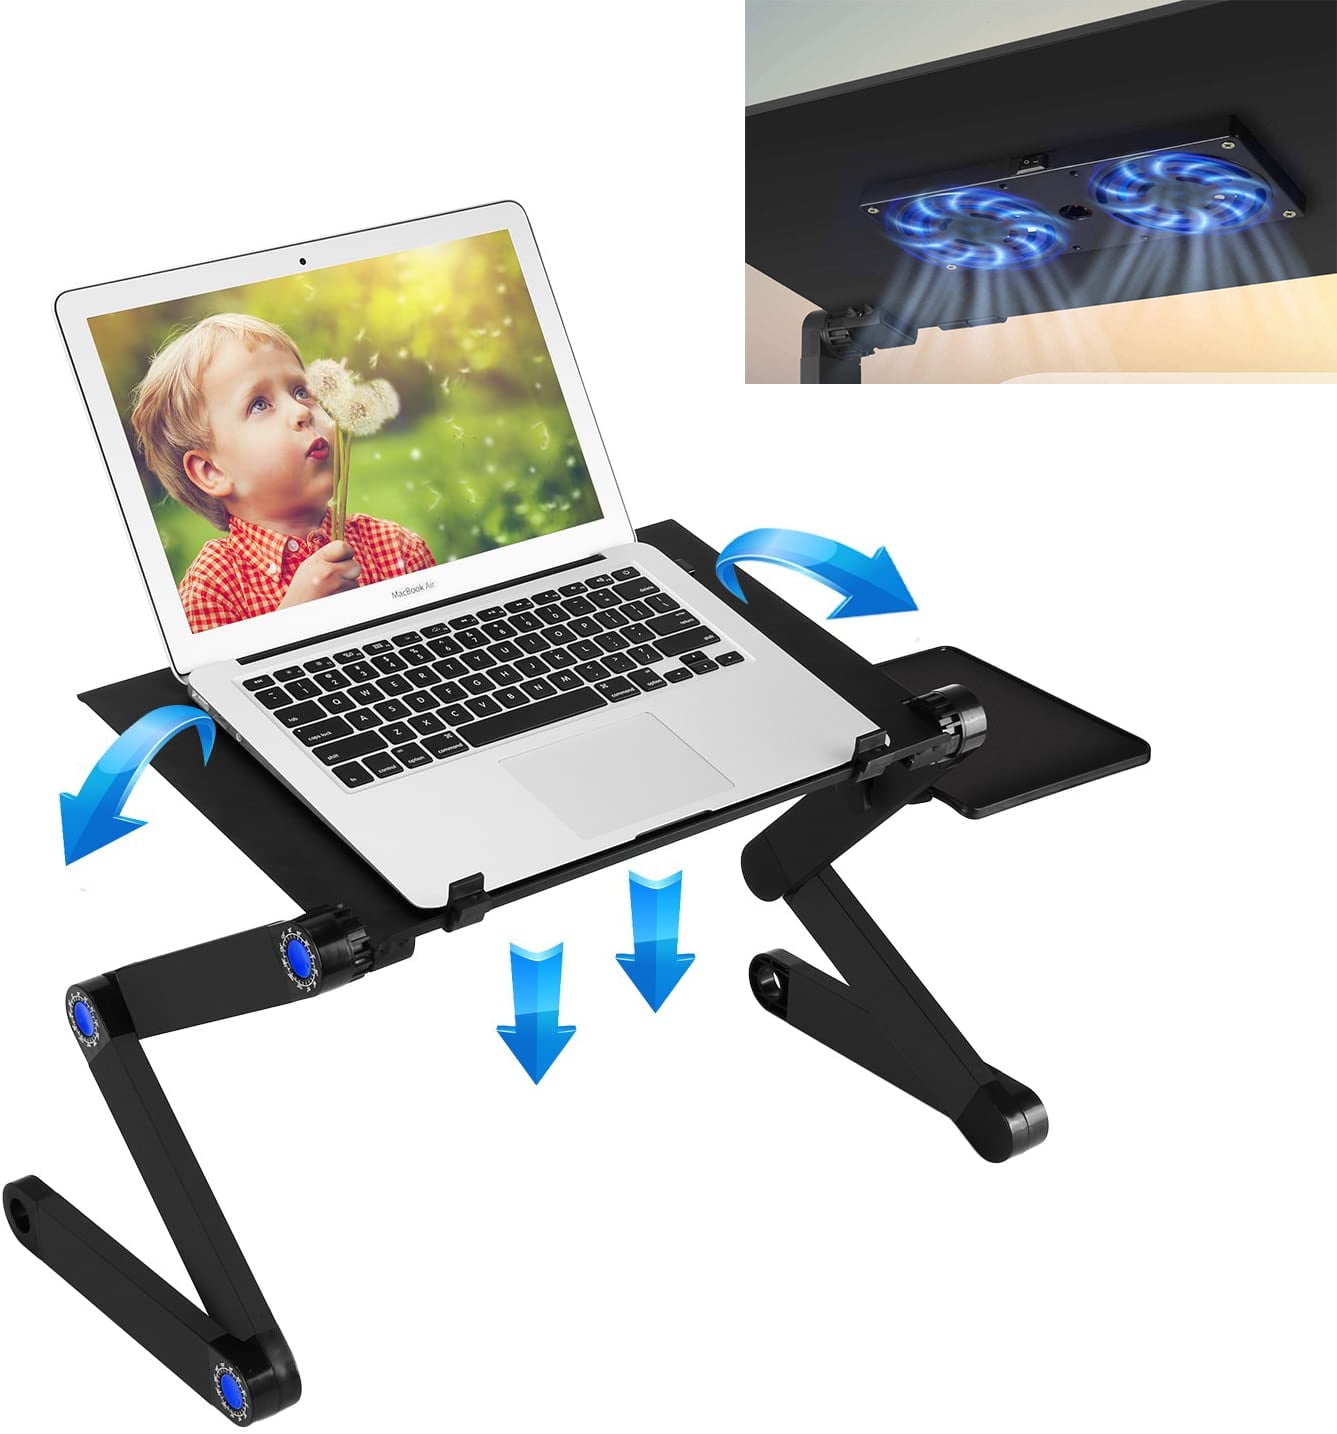 Details about   Portable Laptop USB Desk Table Bed Cooling Fans Stand Adjustable Foldable Modern 